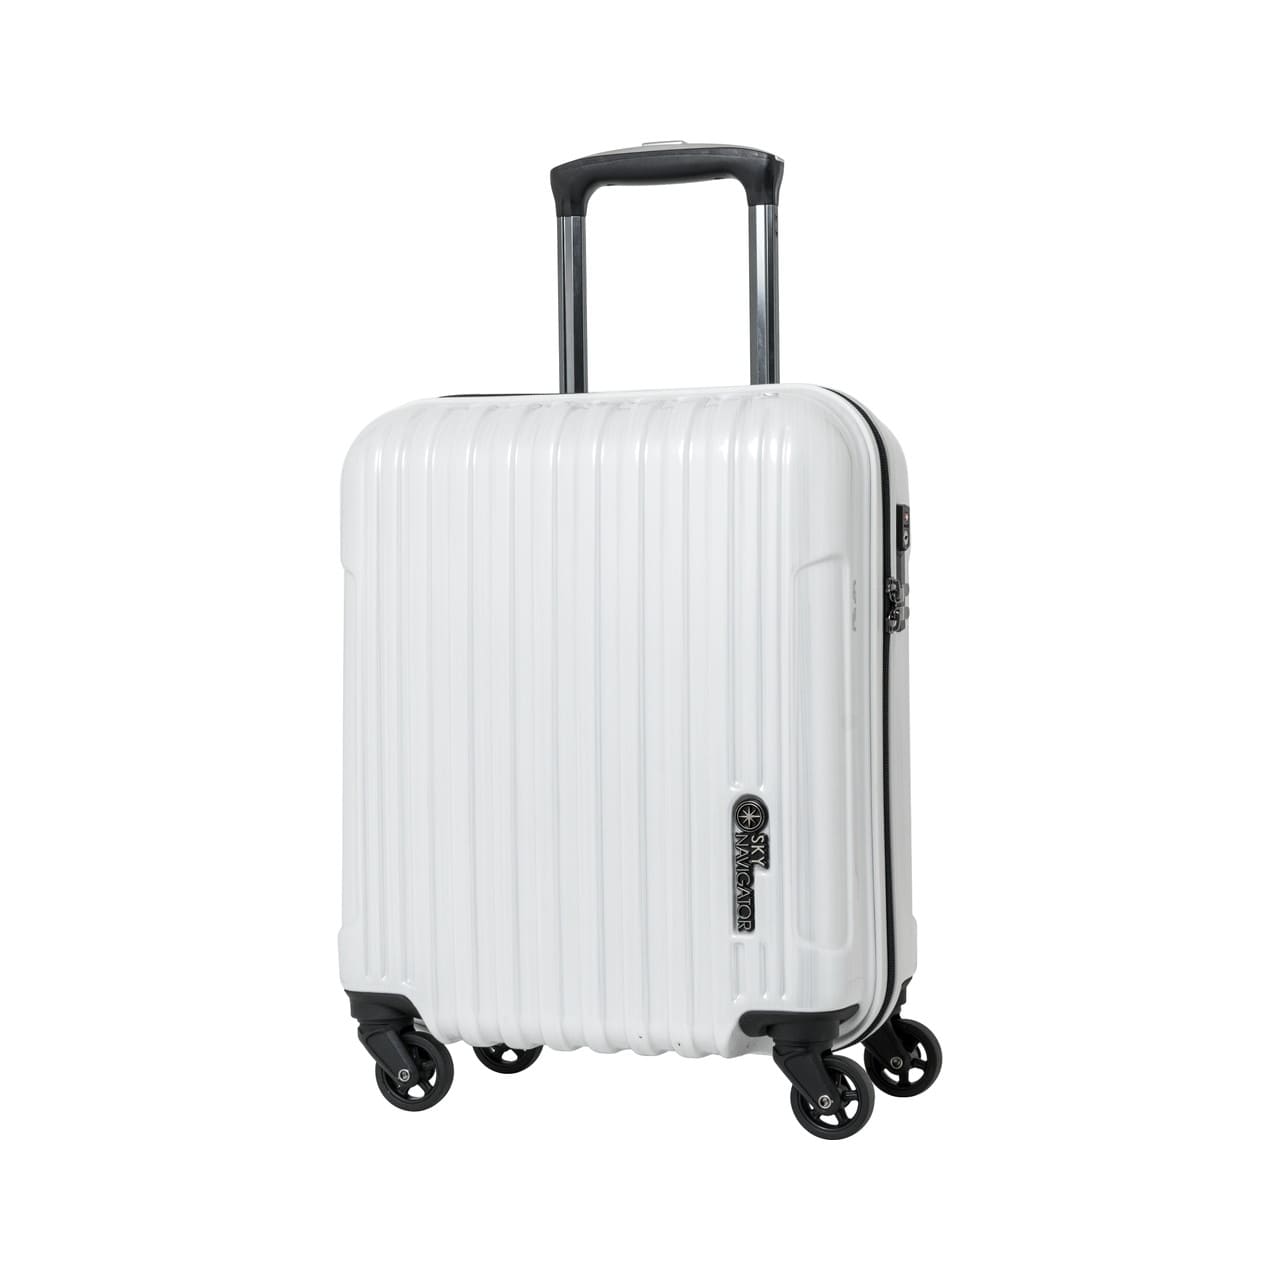 SKYNAVIGATORのスーツケースSK-0722-41のホワイトヘアラインの正面振り画像